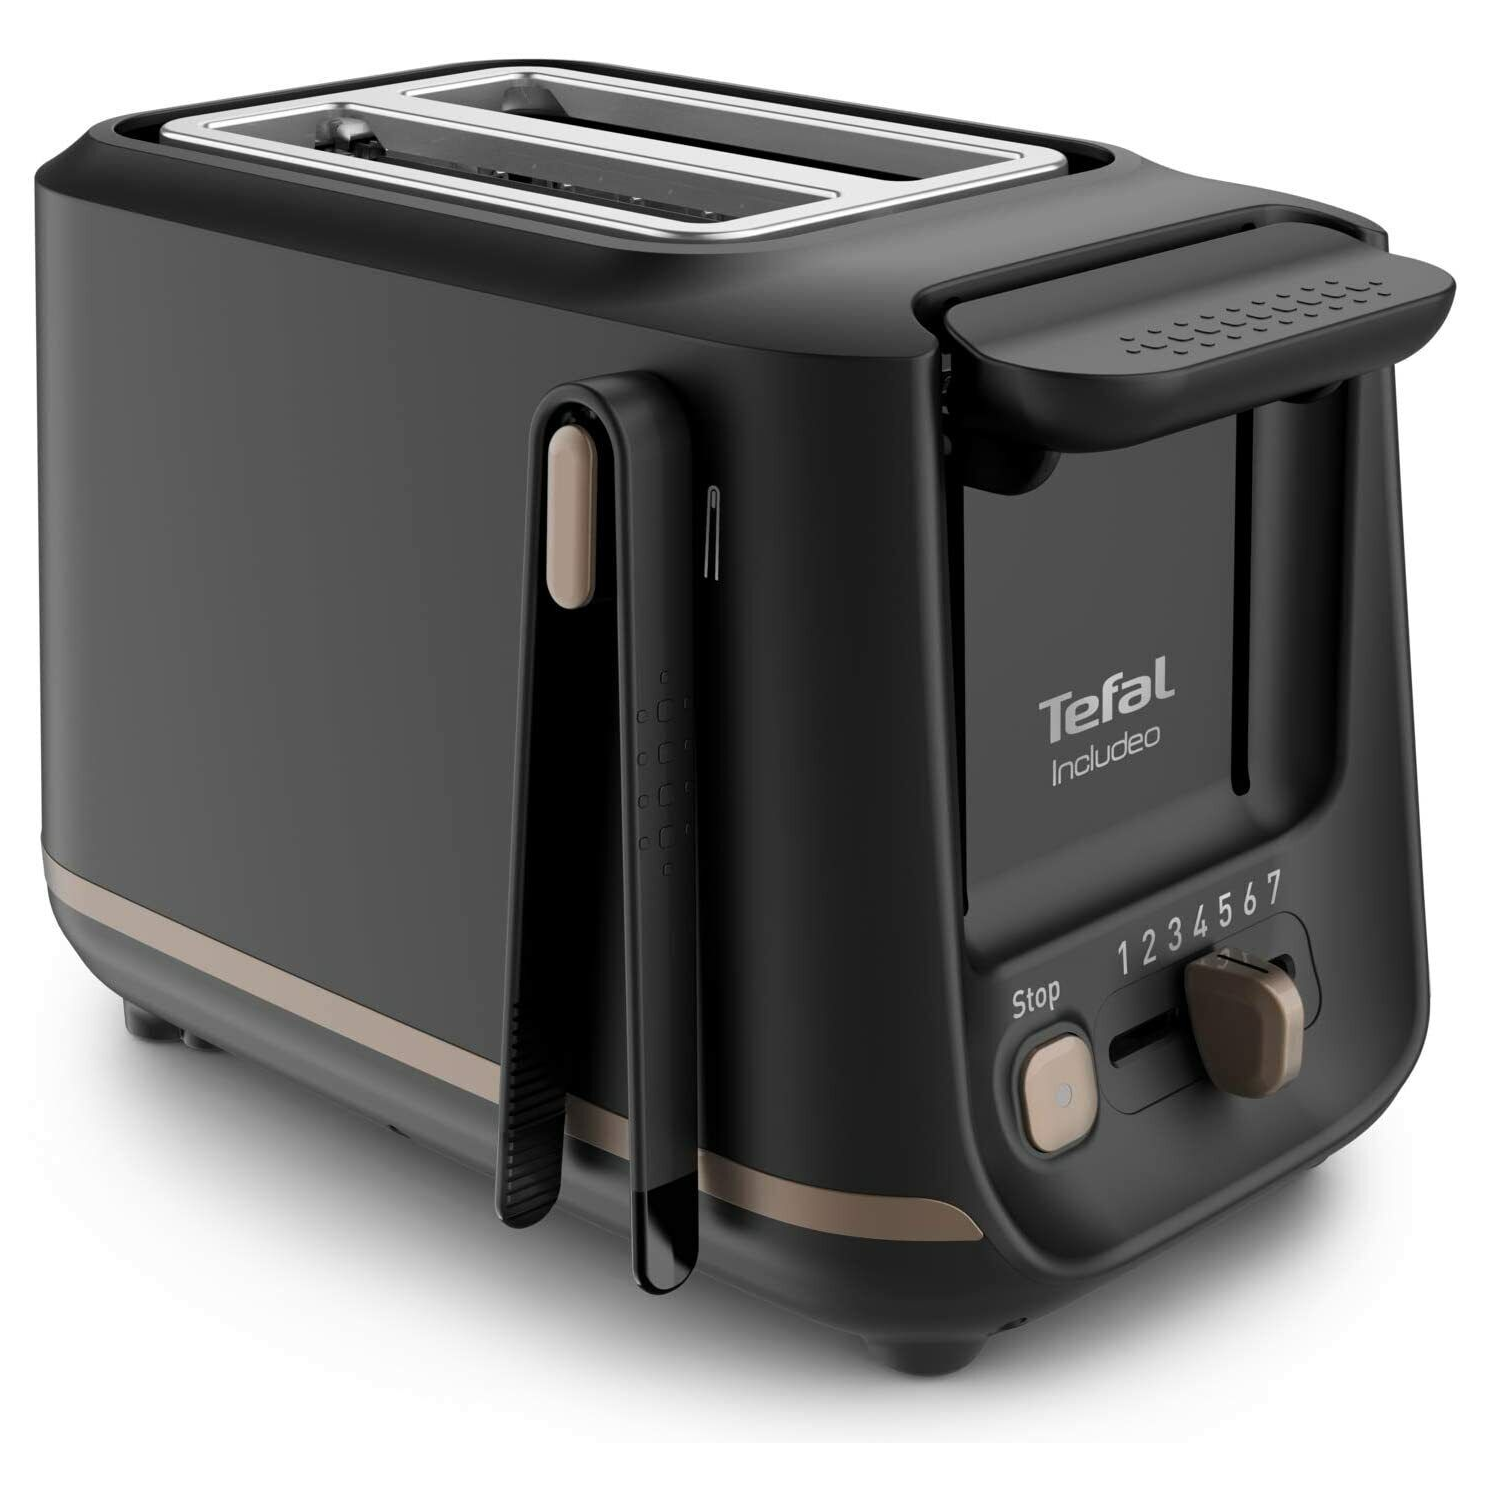 TEFAL Includeo TT533840 2-Slice Toaster